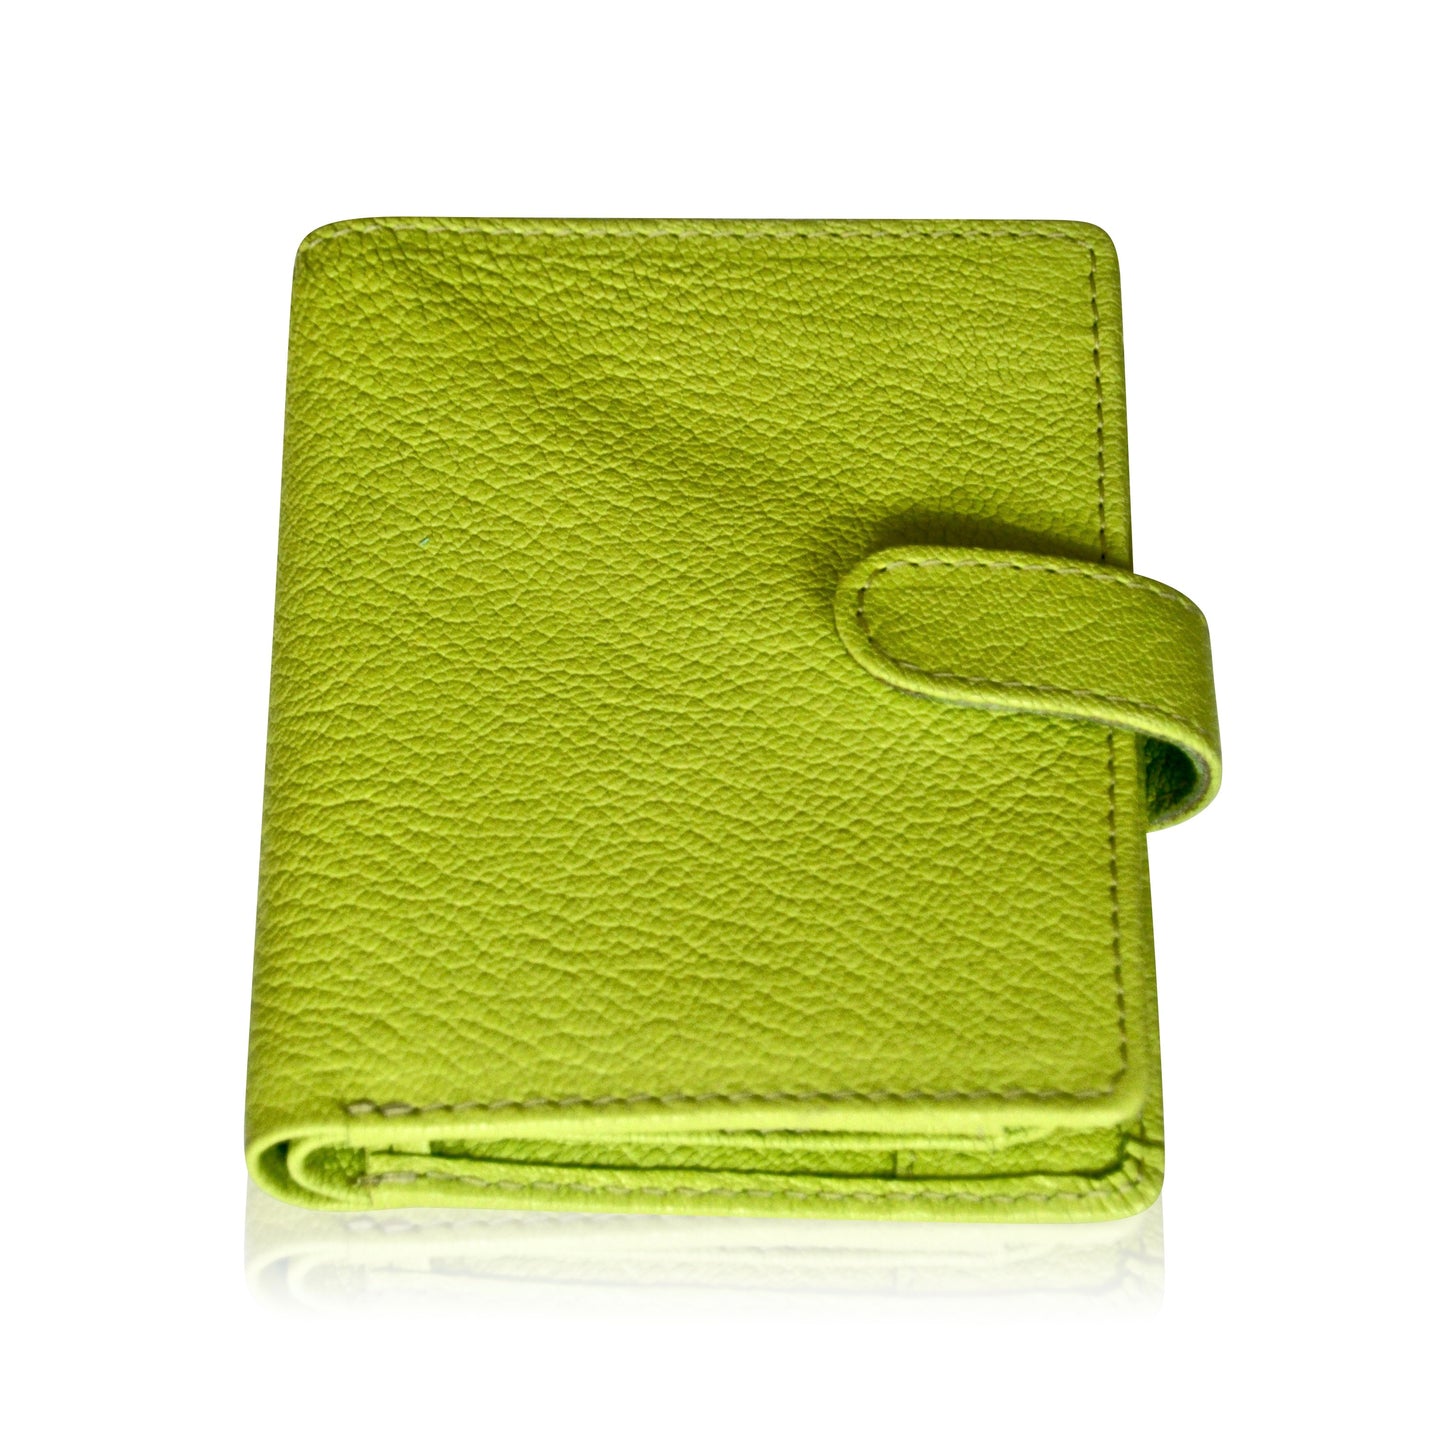 Designer Leather Wallet For Women